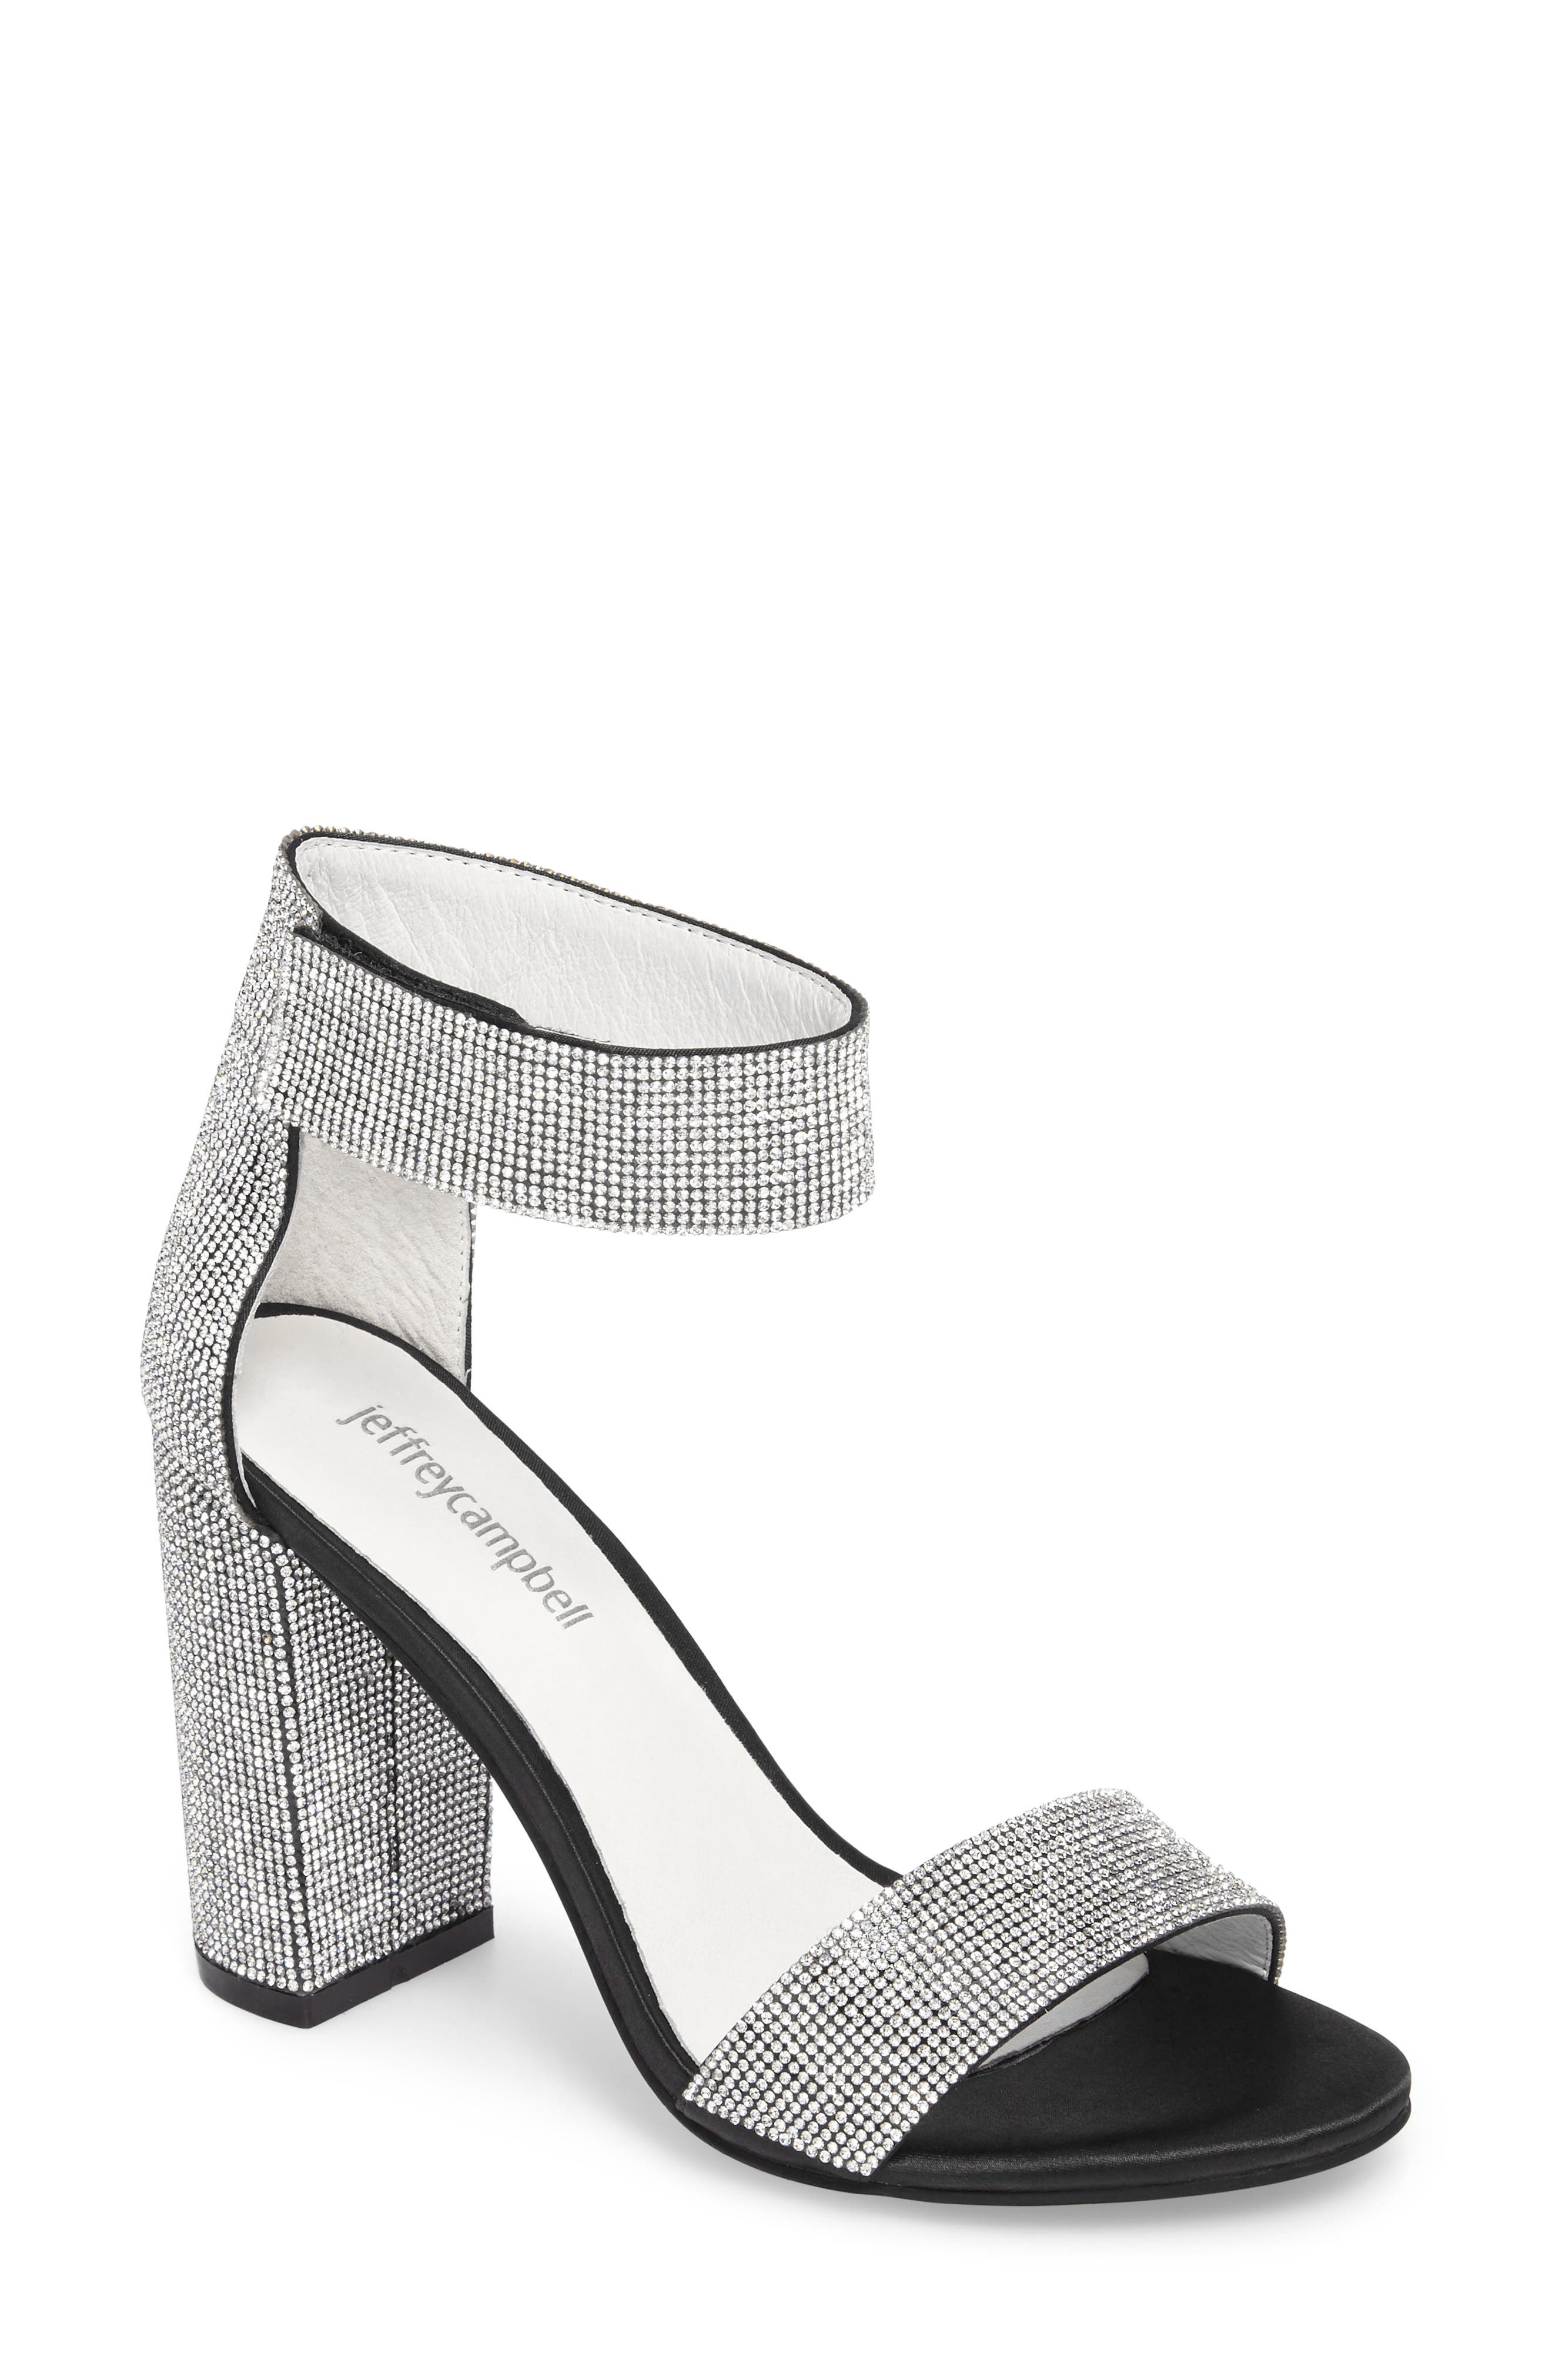 silver dress shoes block heel